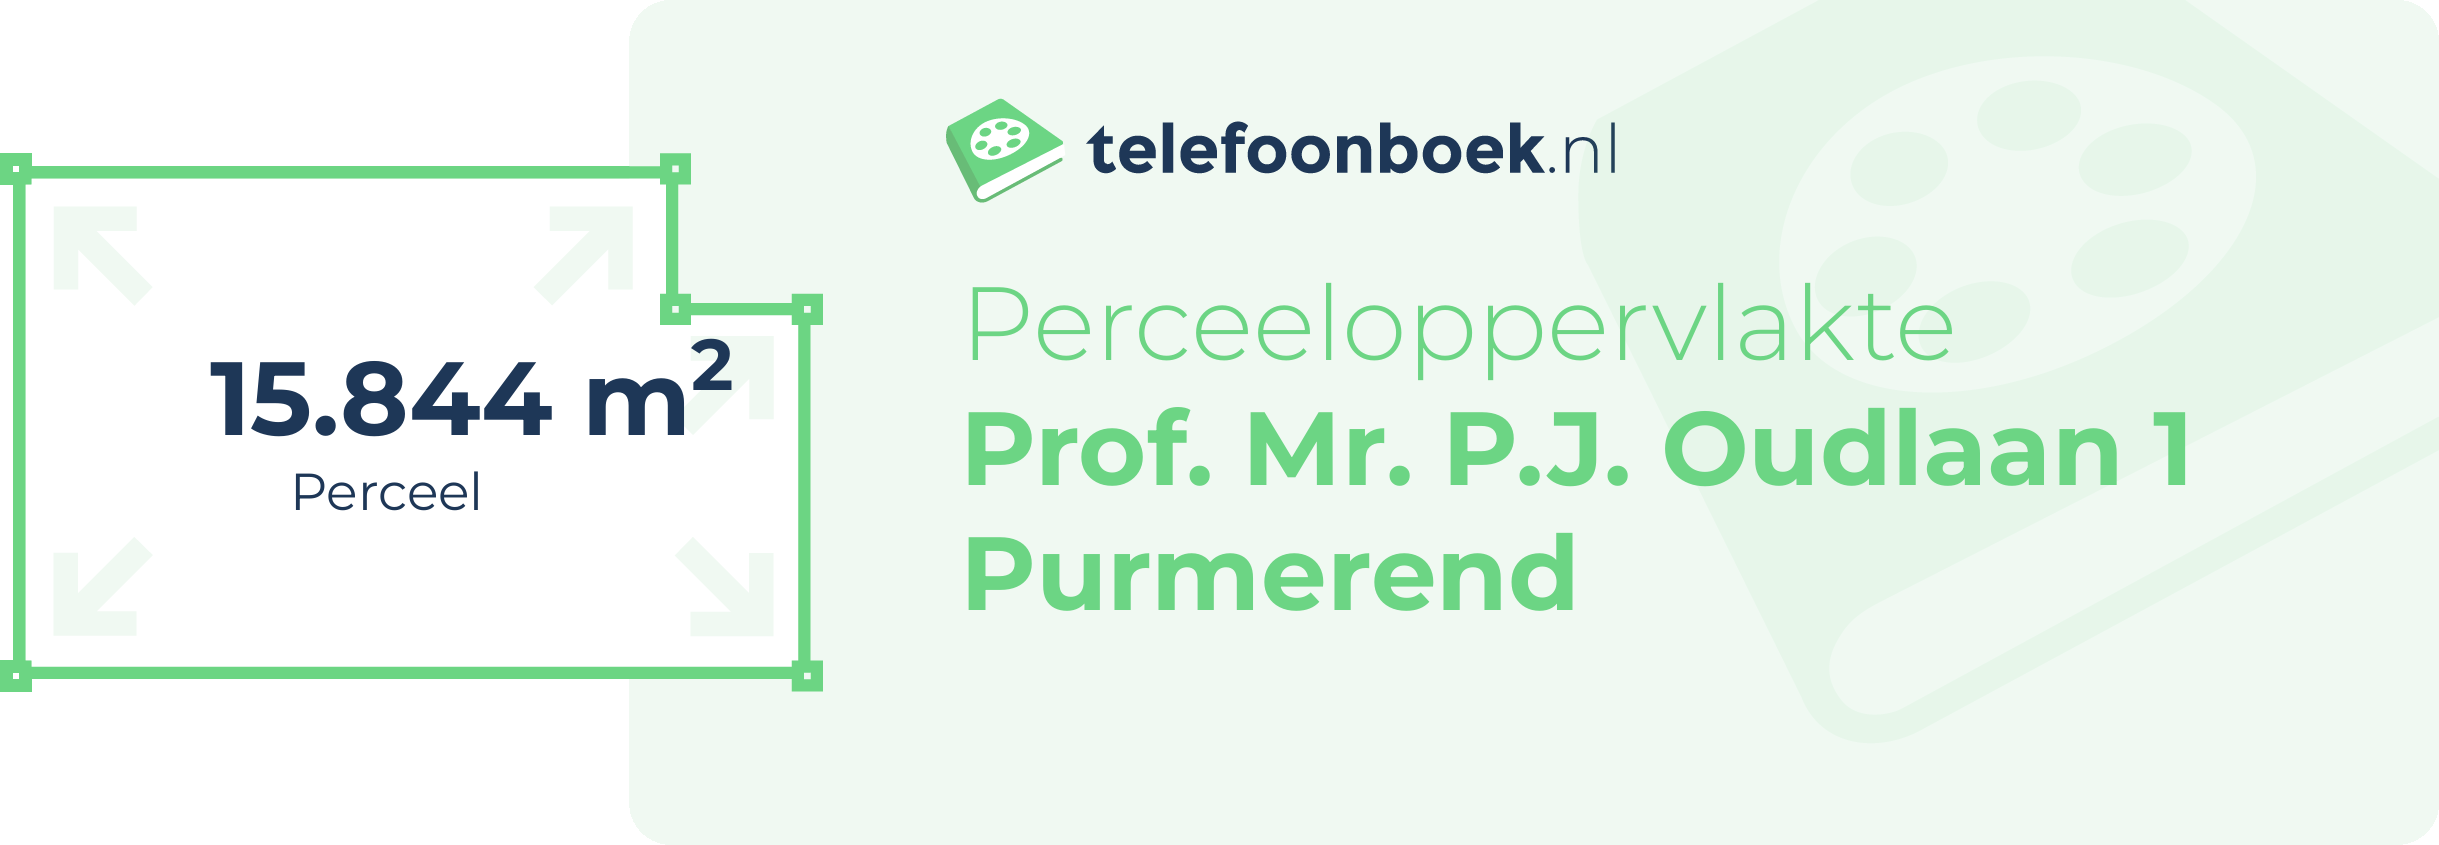 Perceeloppervlakte Prof. Mr. P.J. Oudlaan 1 Purmerend